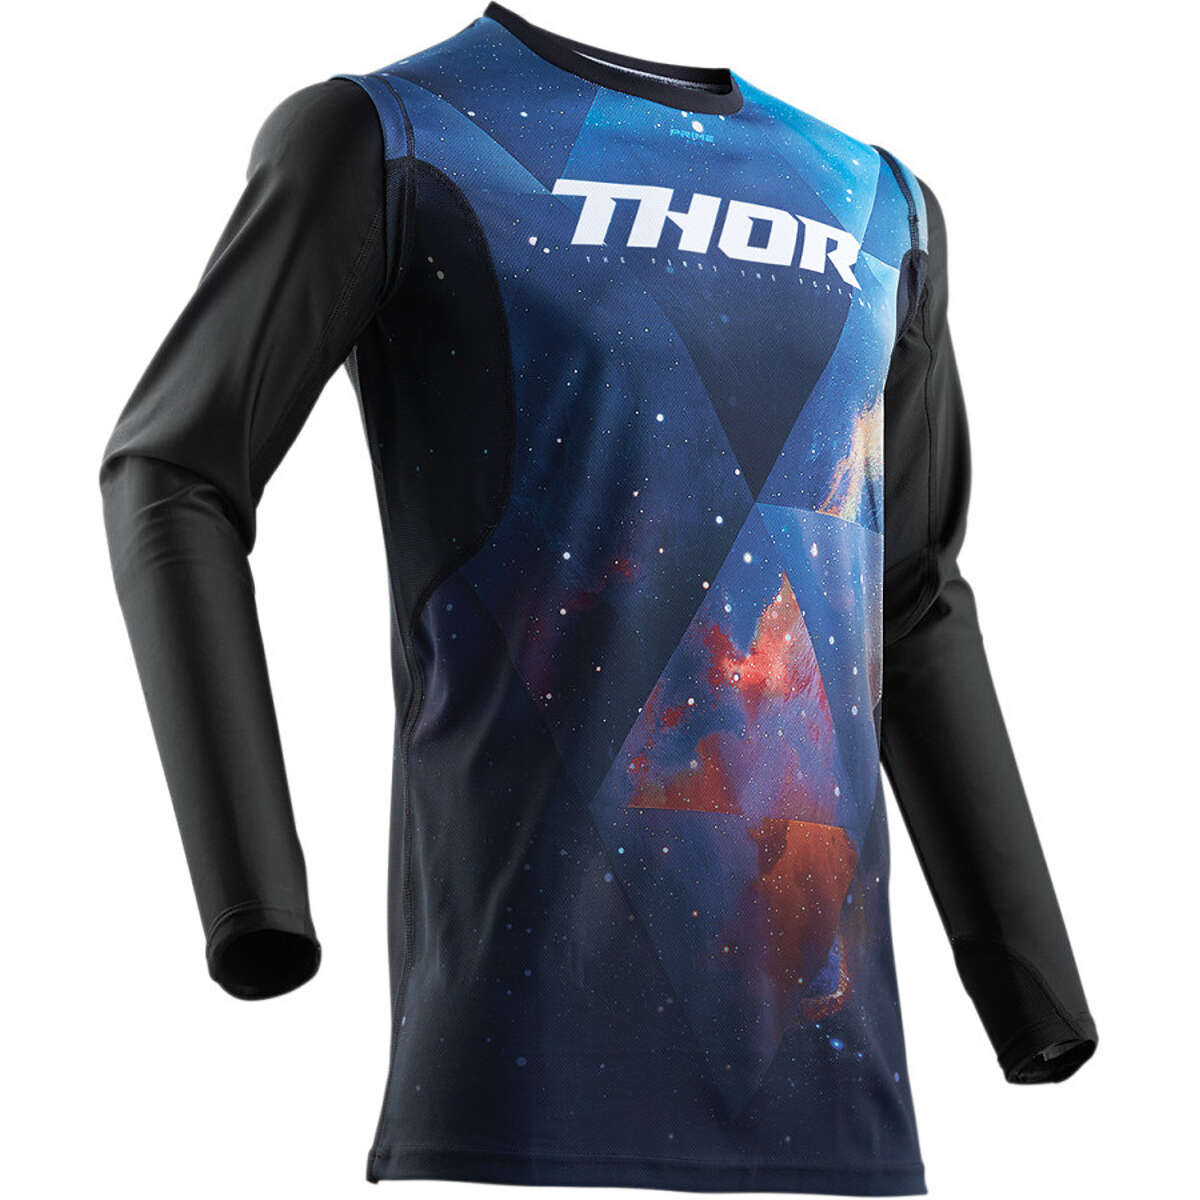 Thor Maglia MX Prime Fit Nebula S8S - Black